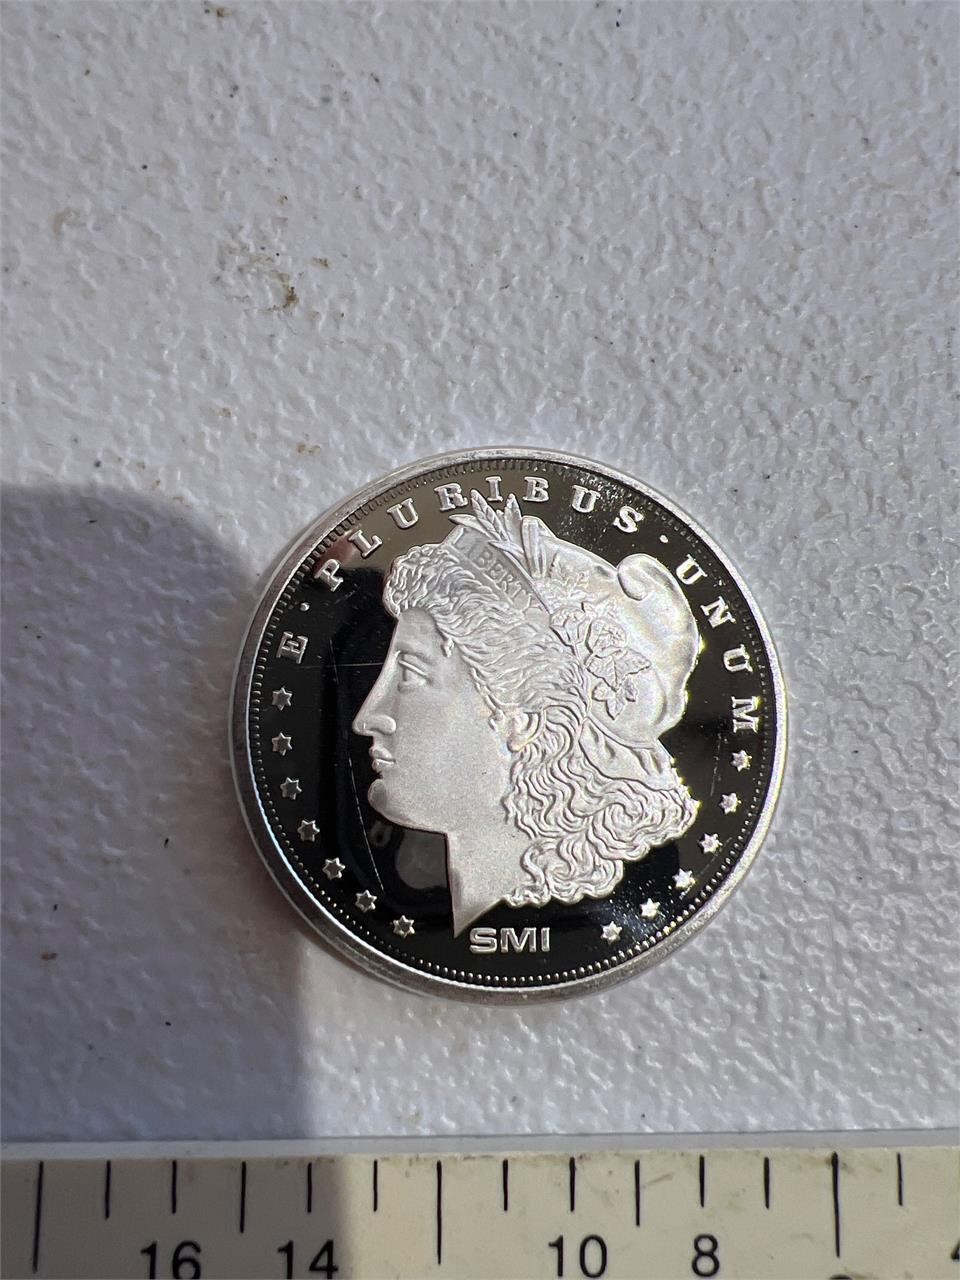 Sunshine mint 1 ounce silver Morgan design